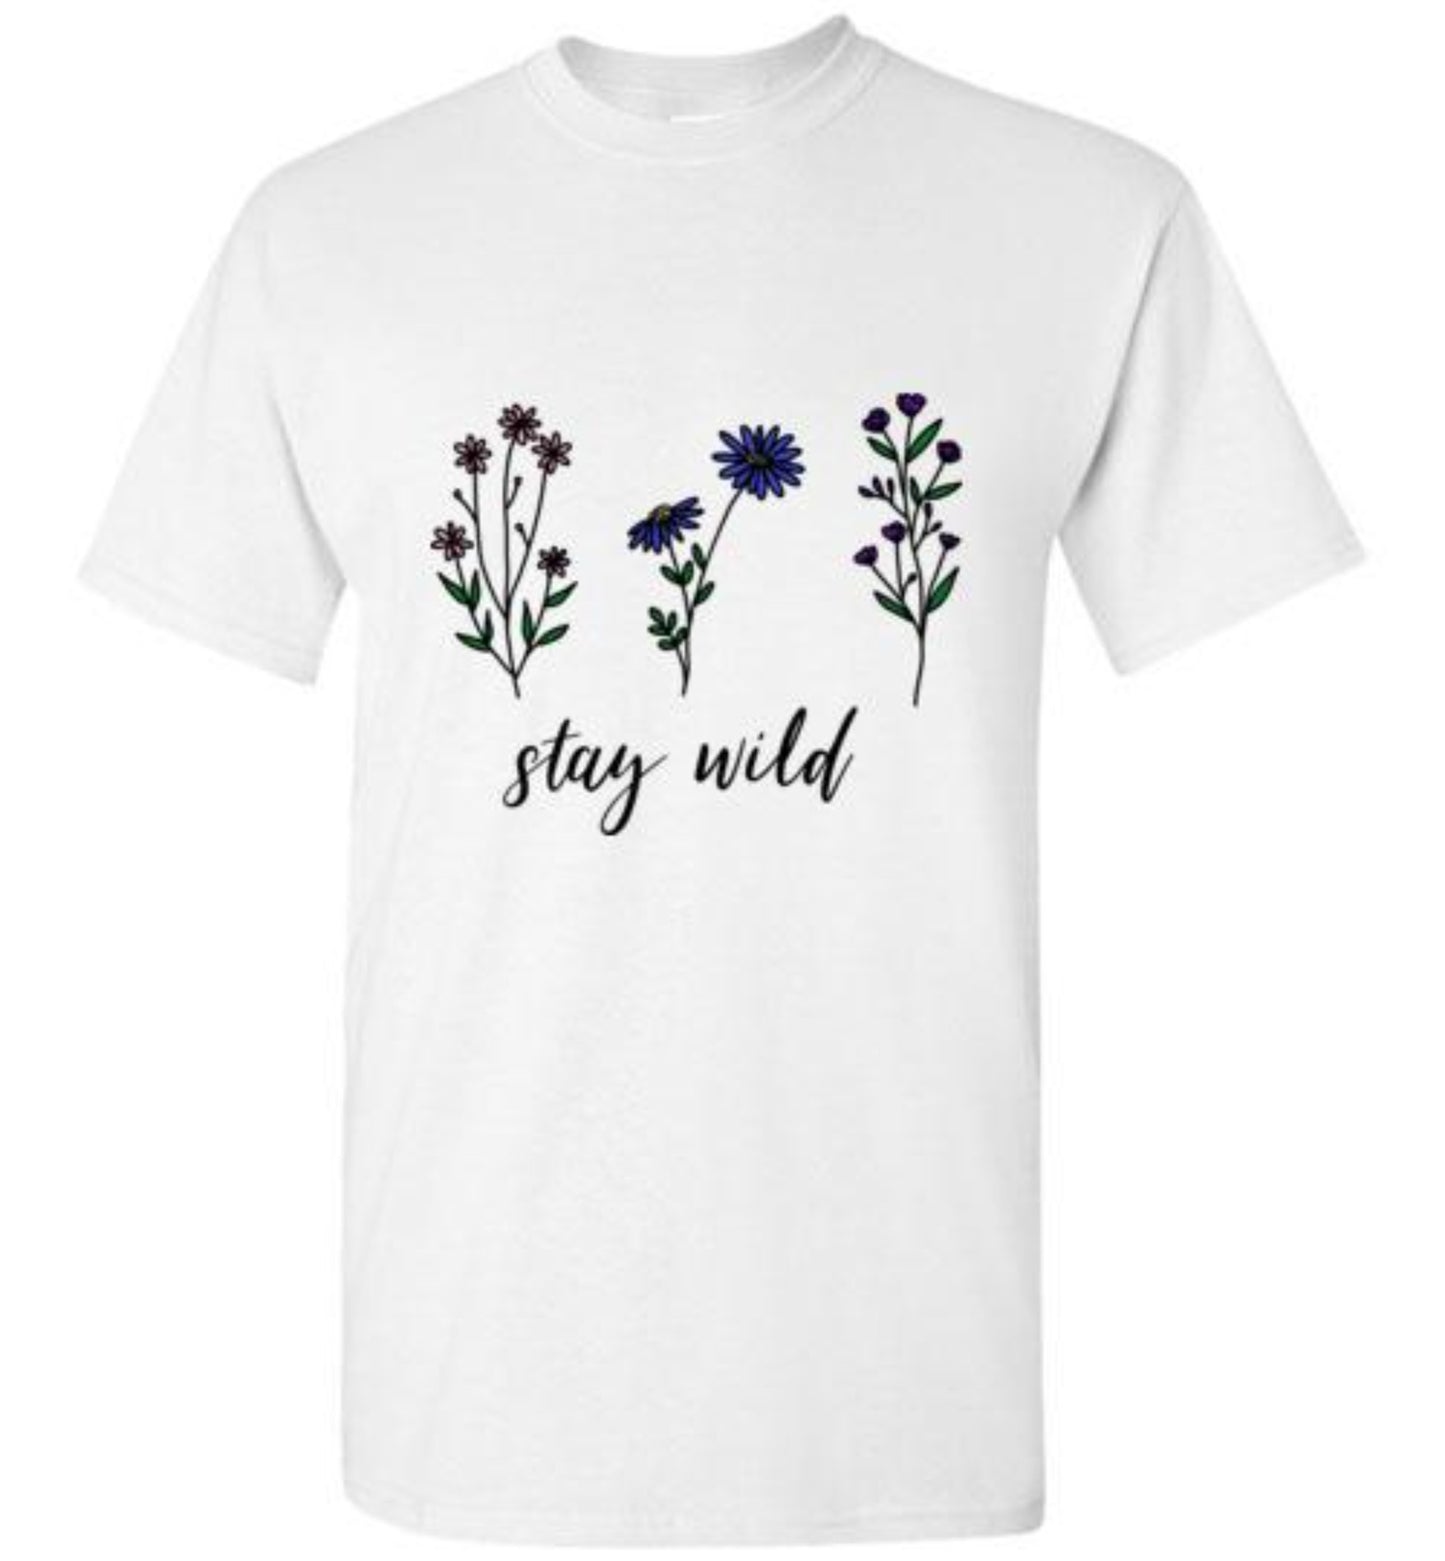 Stay Wild t-shirt